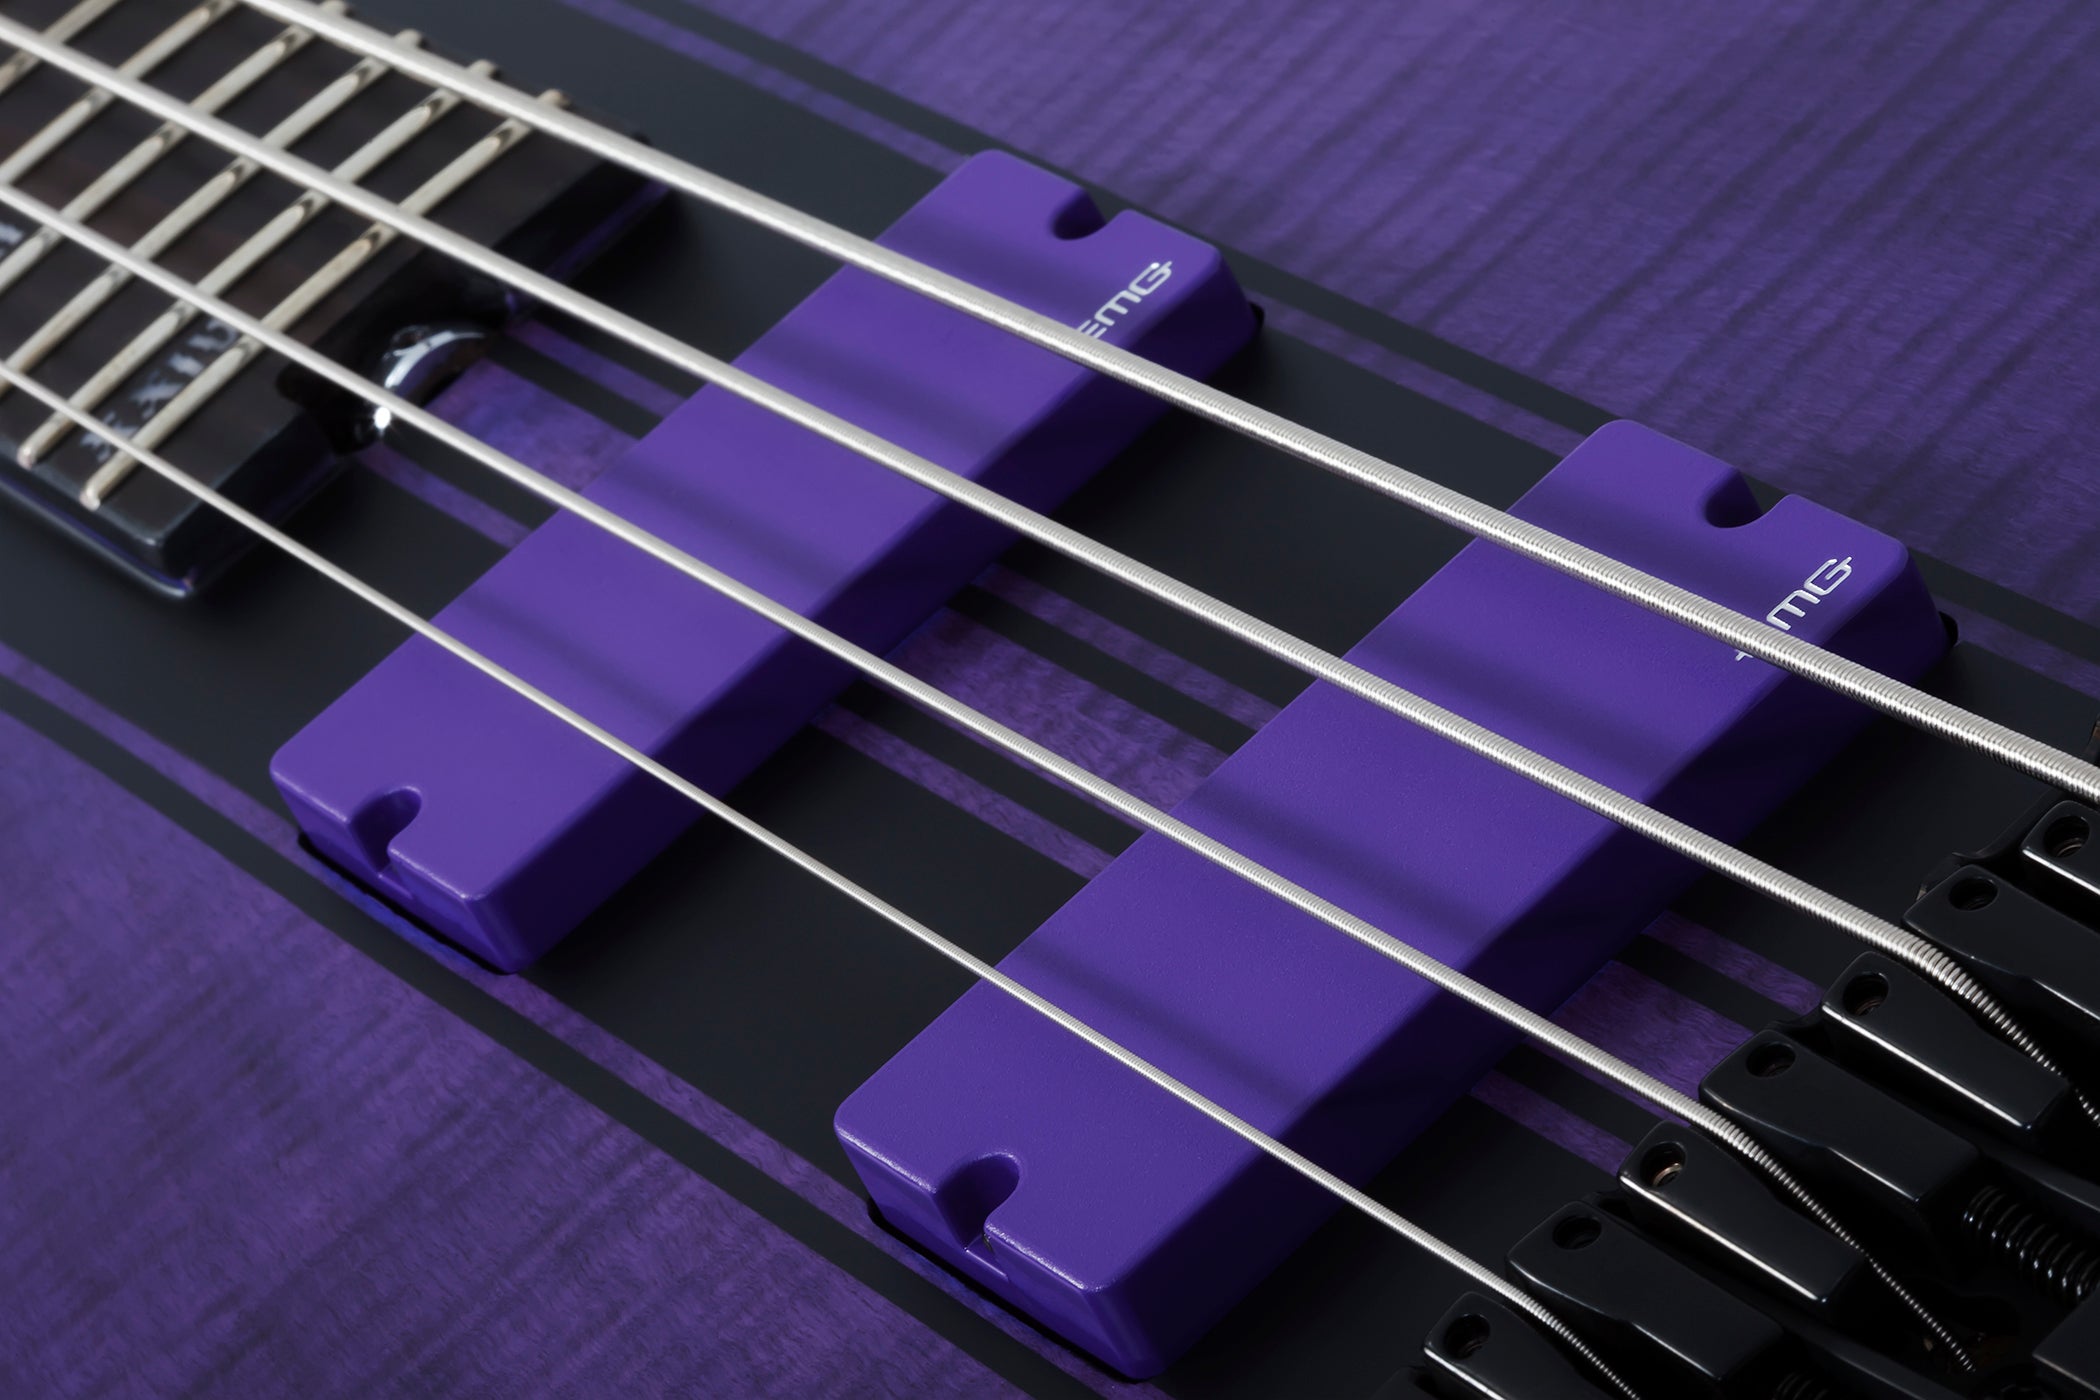 Schecter C-4 GT Left Handed Electric Bass Satin Trans Purple 1532-SHC